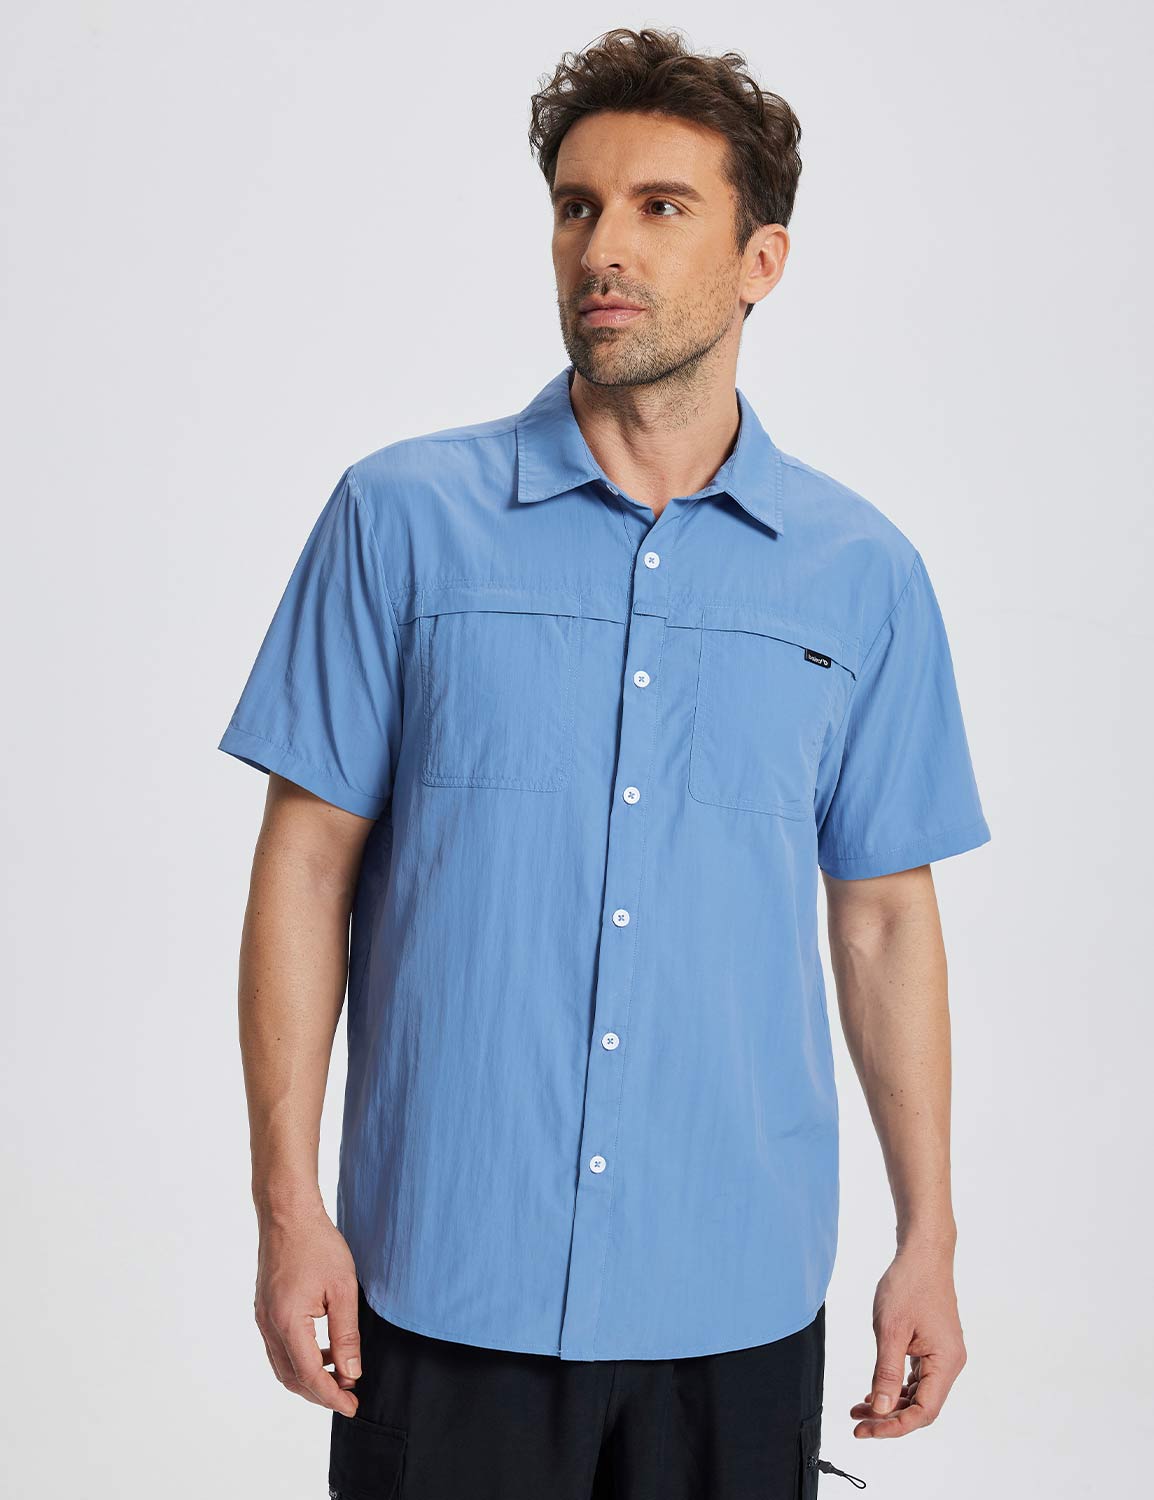 Baleaf Men's Fishing Shirts for Ultimate Comfort XL / Ashleigh Blue